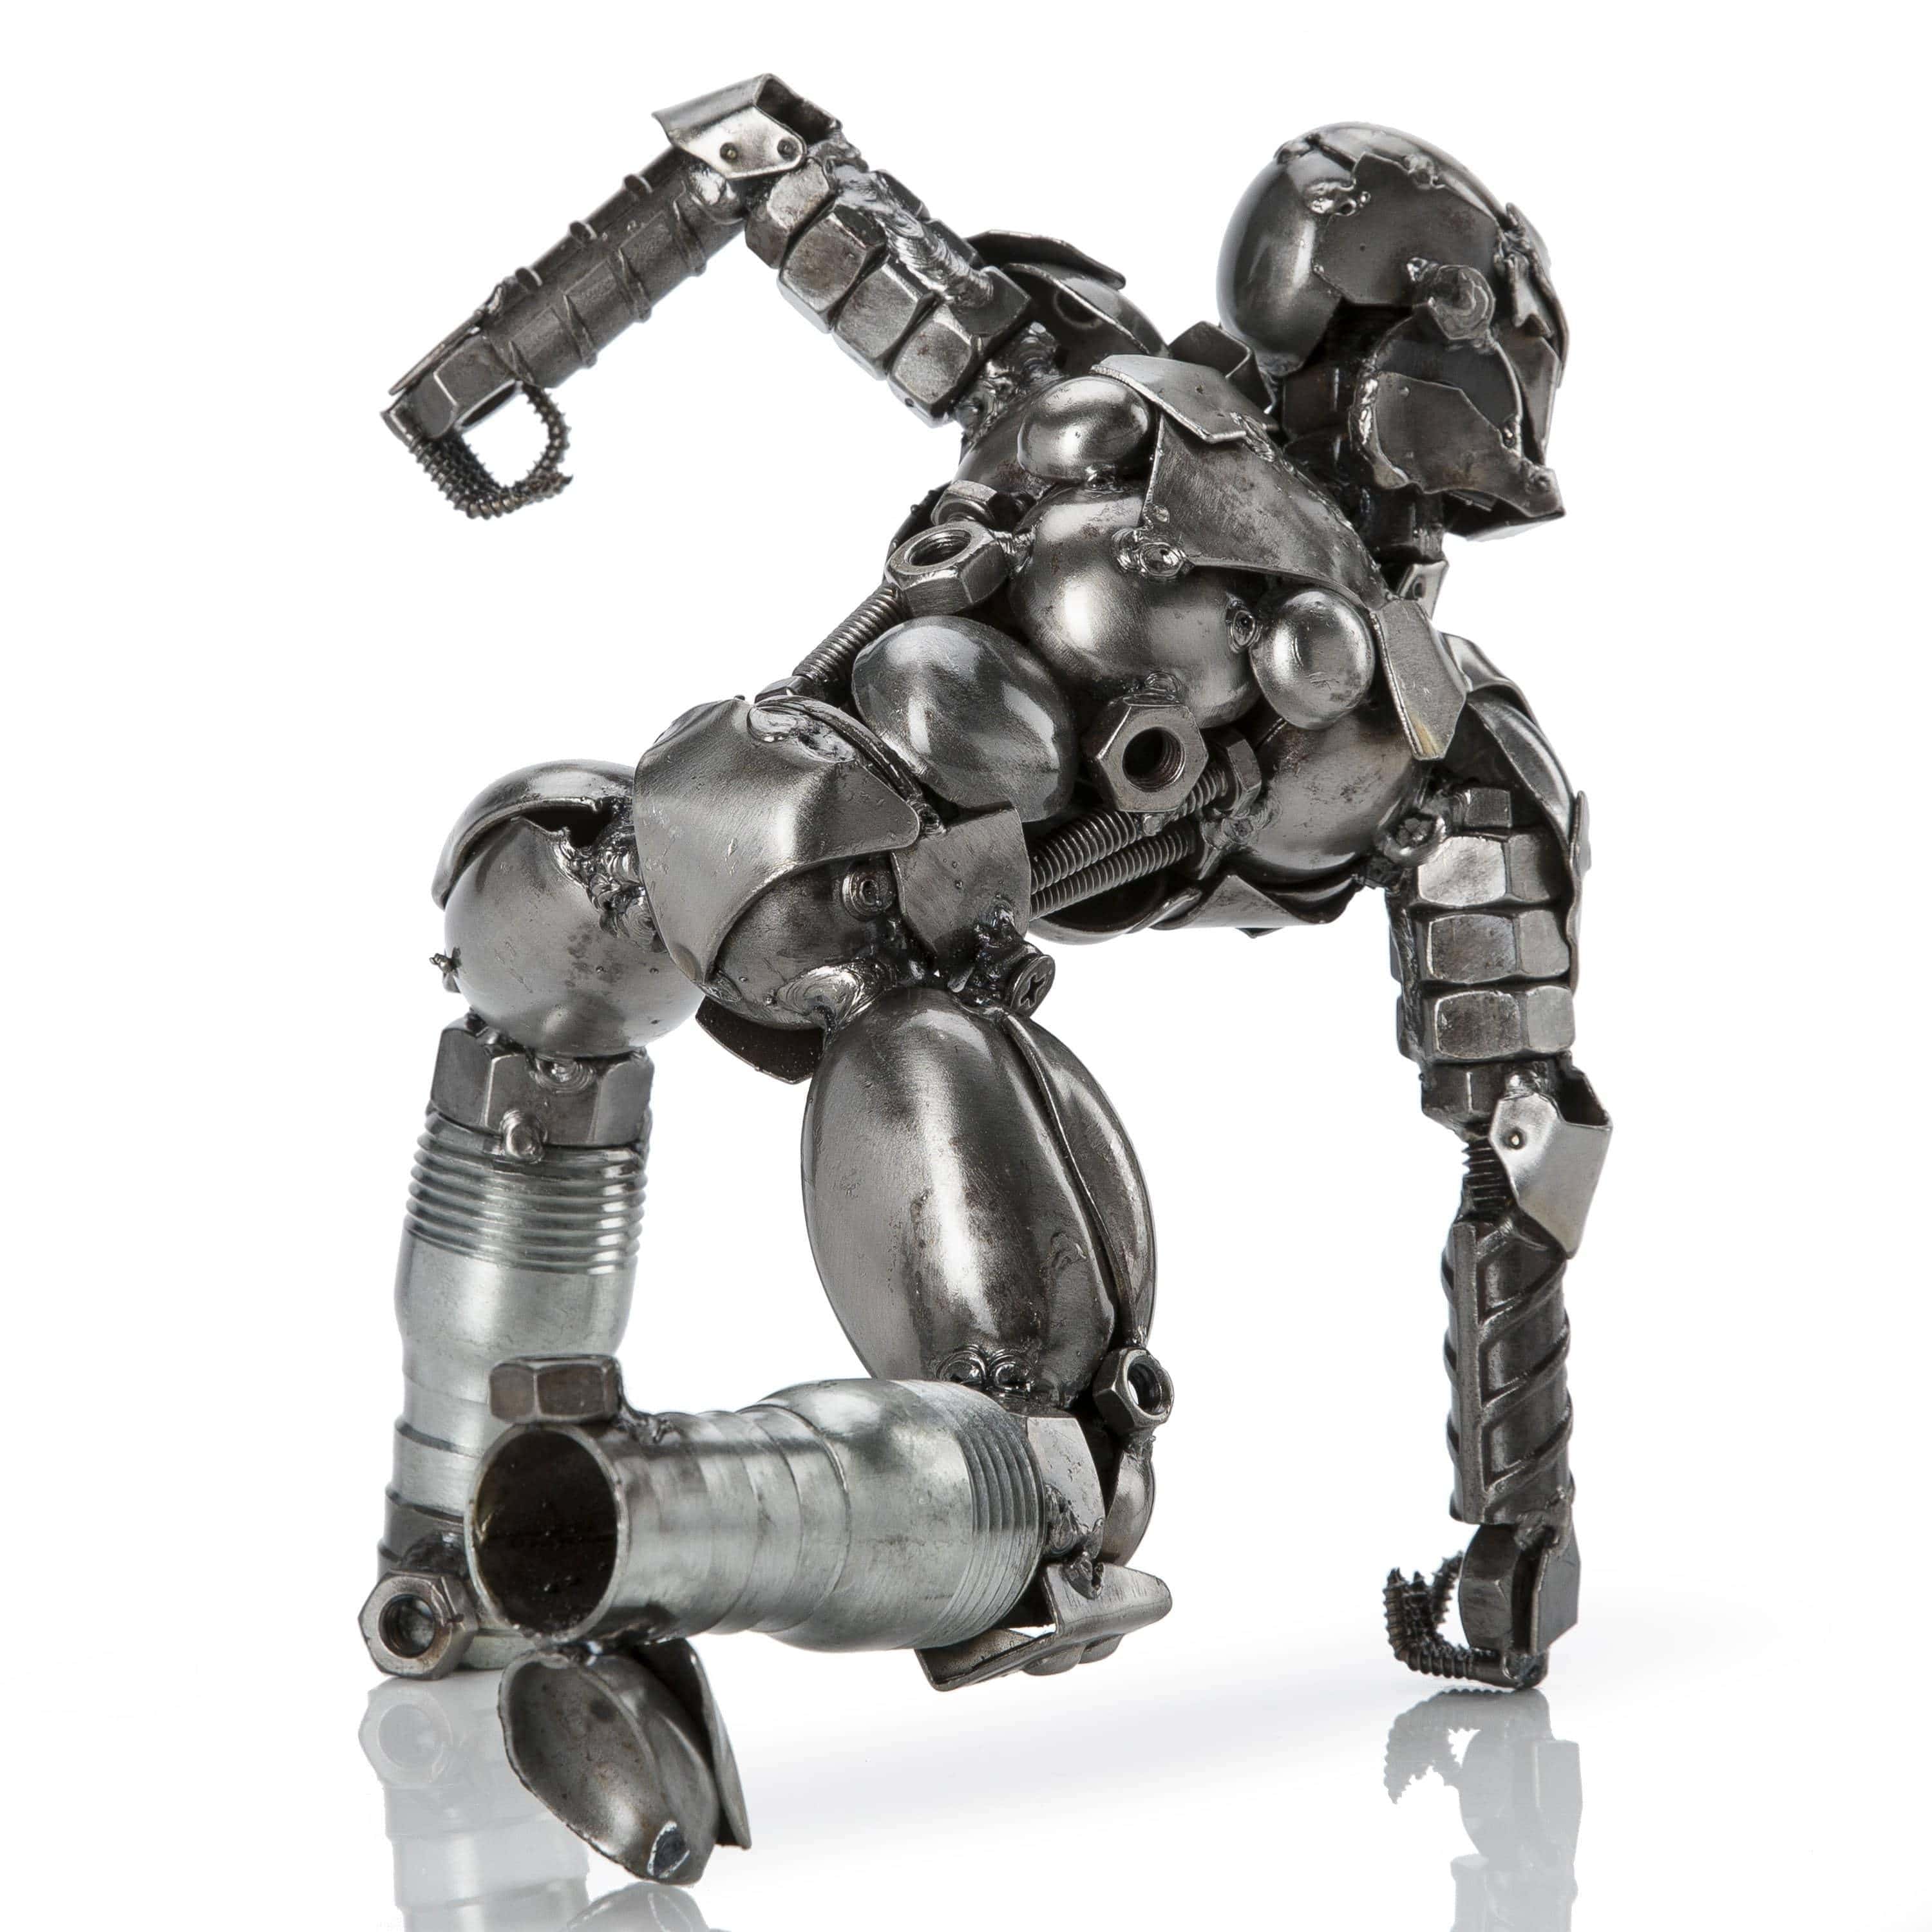 Kalifano Recycled Metal Art Ironman Inspired Recycled Metal Sculpture RMS-700IMB-N